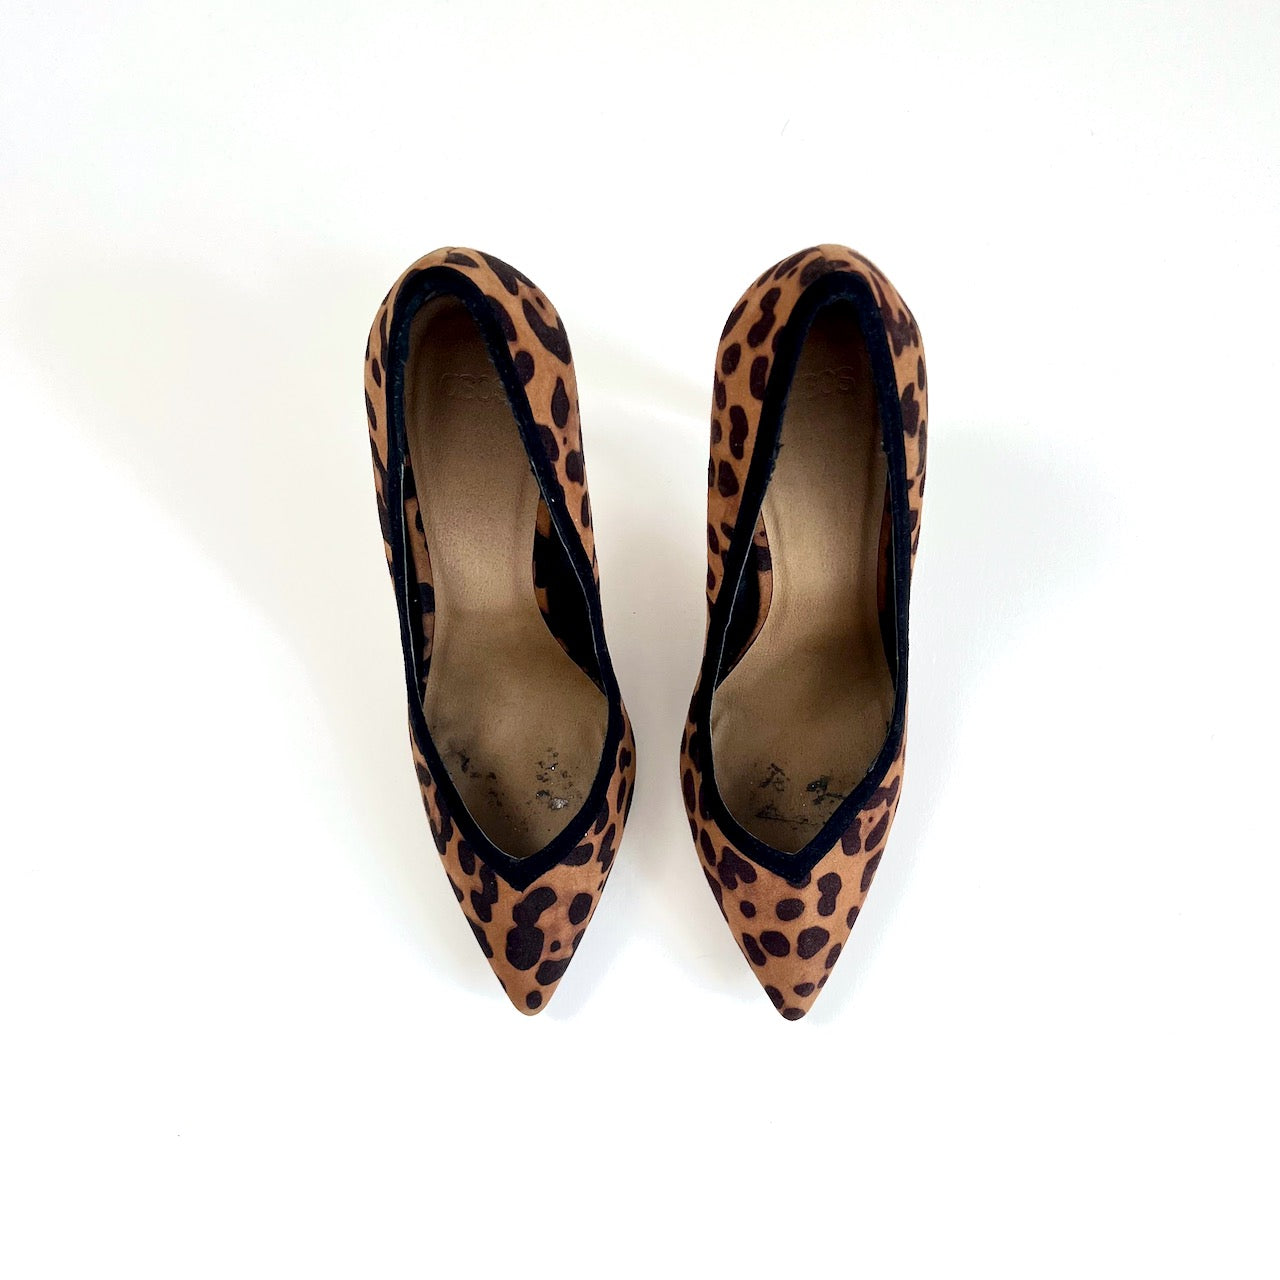 Leopard print block heel sandals, SOLD OUT on ASOS.... - Depop